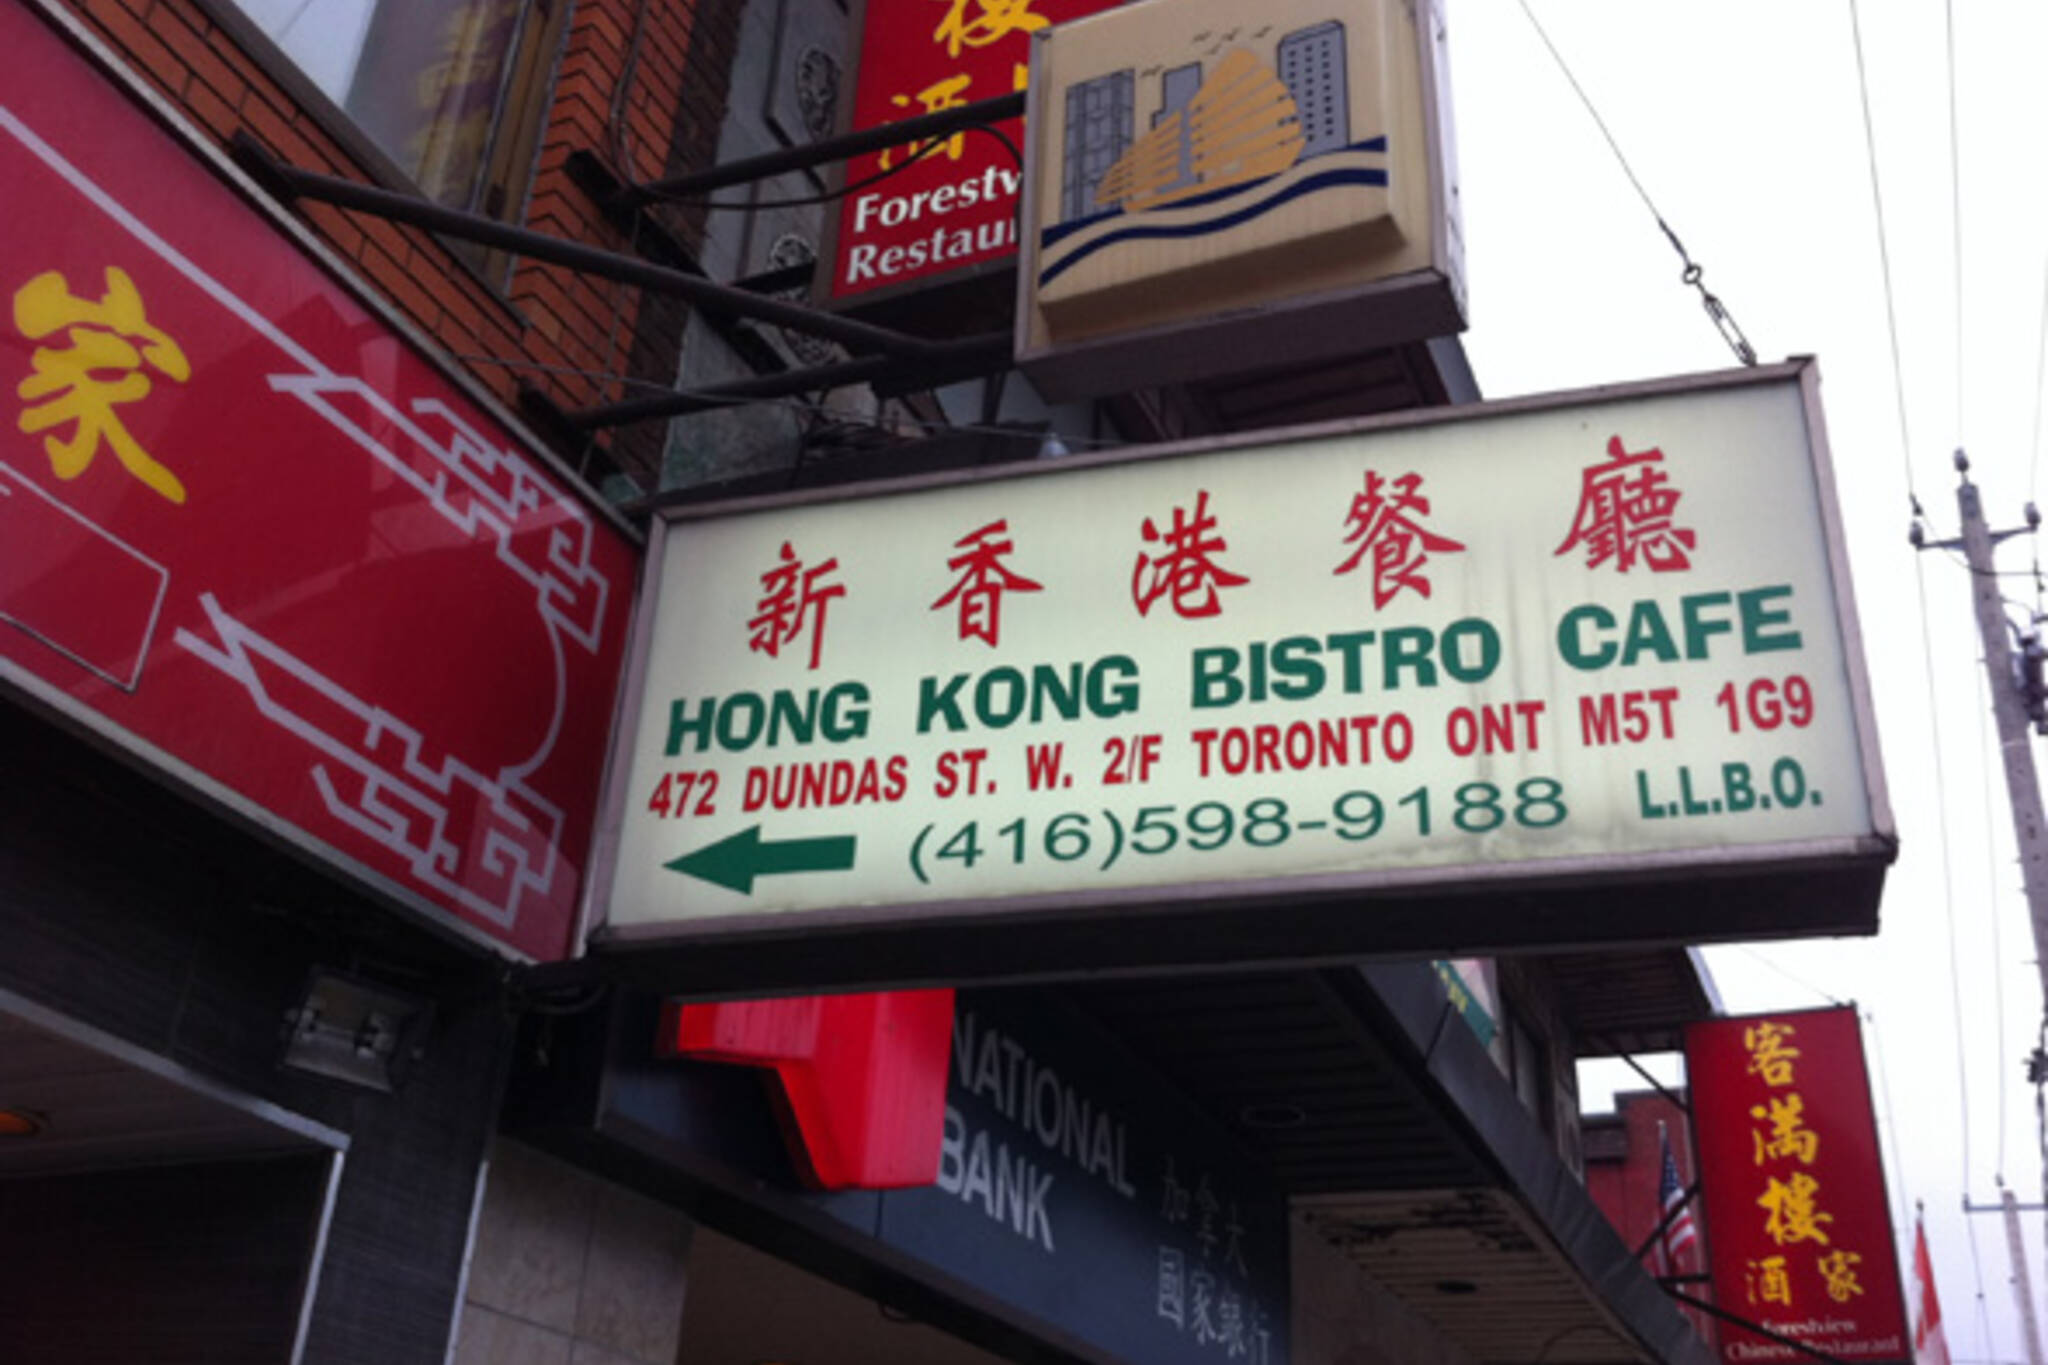 Hong Kong Bistro Cafe